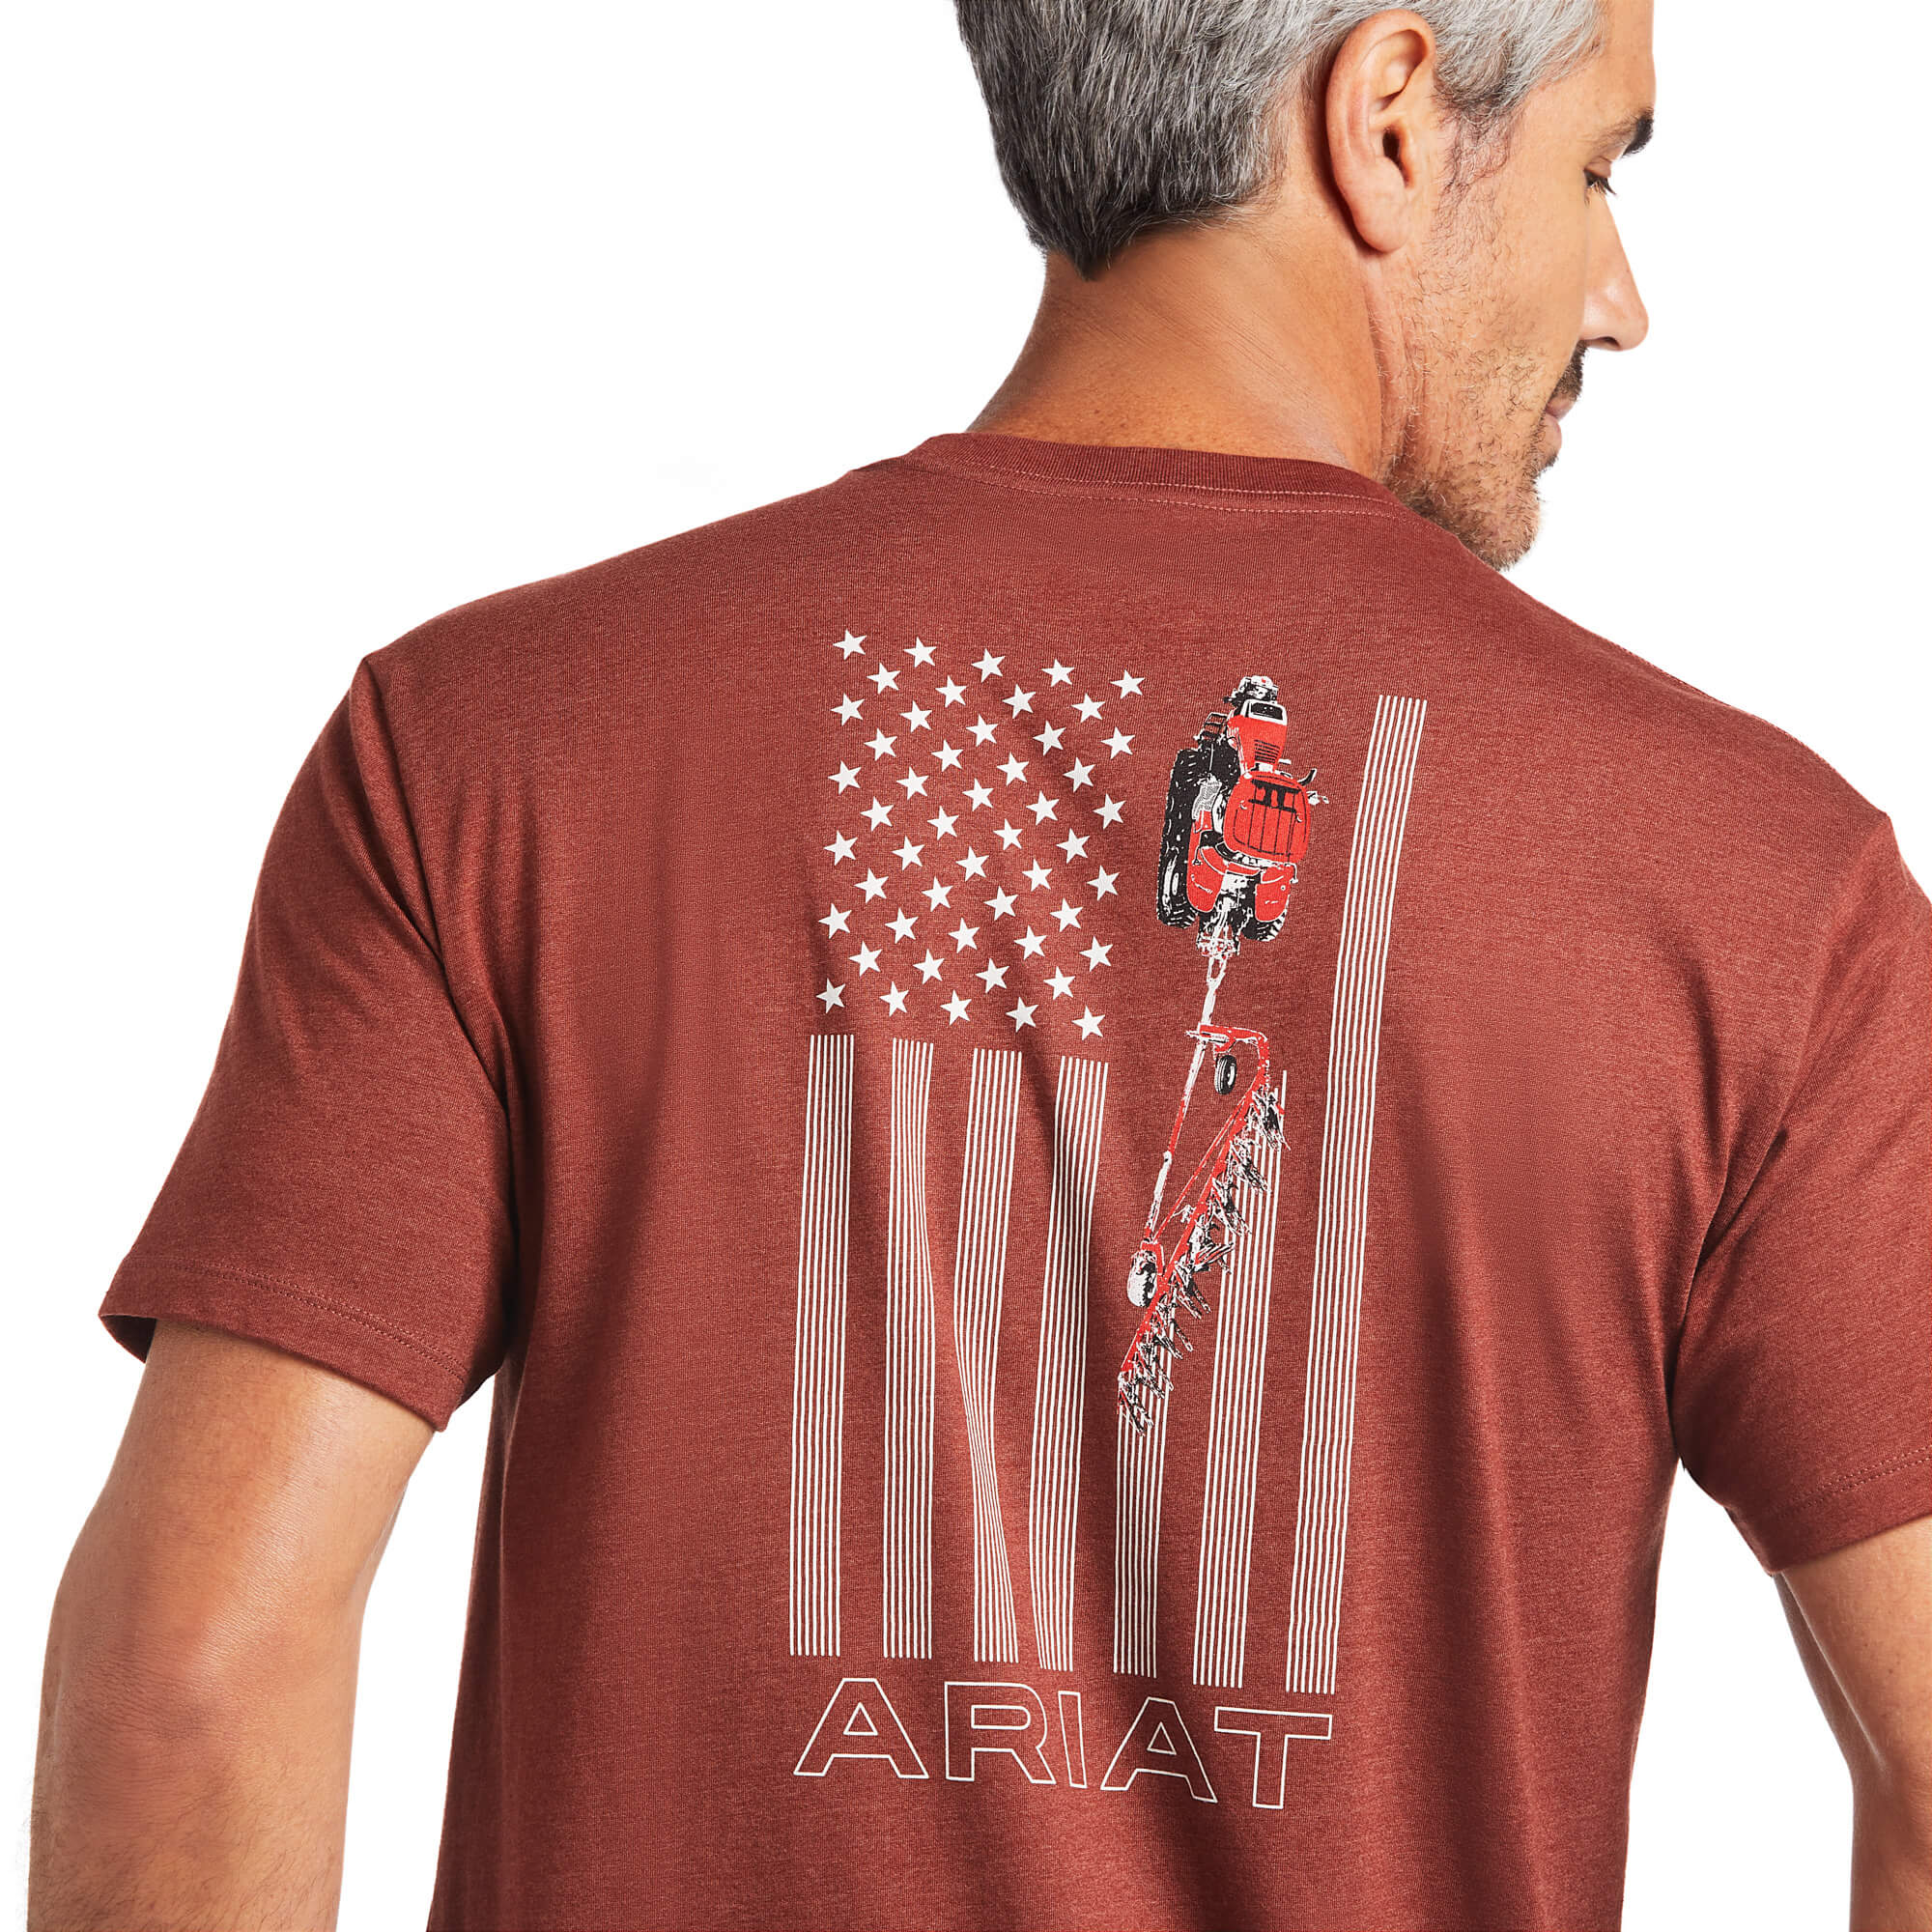 Ariat Farm T-Shirt